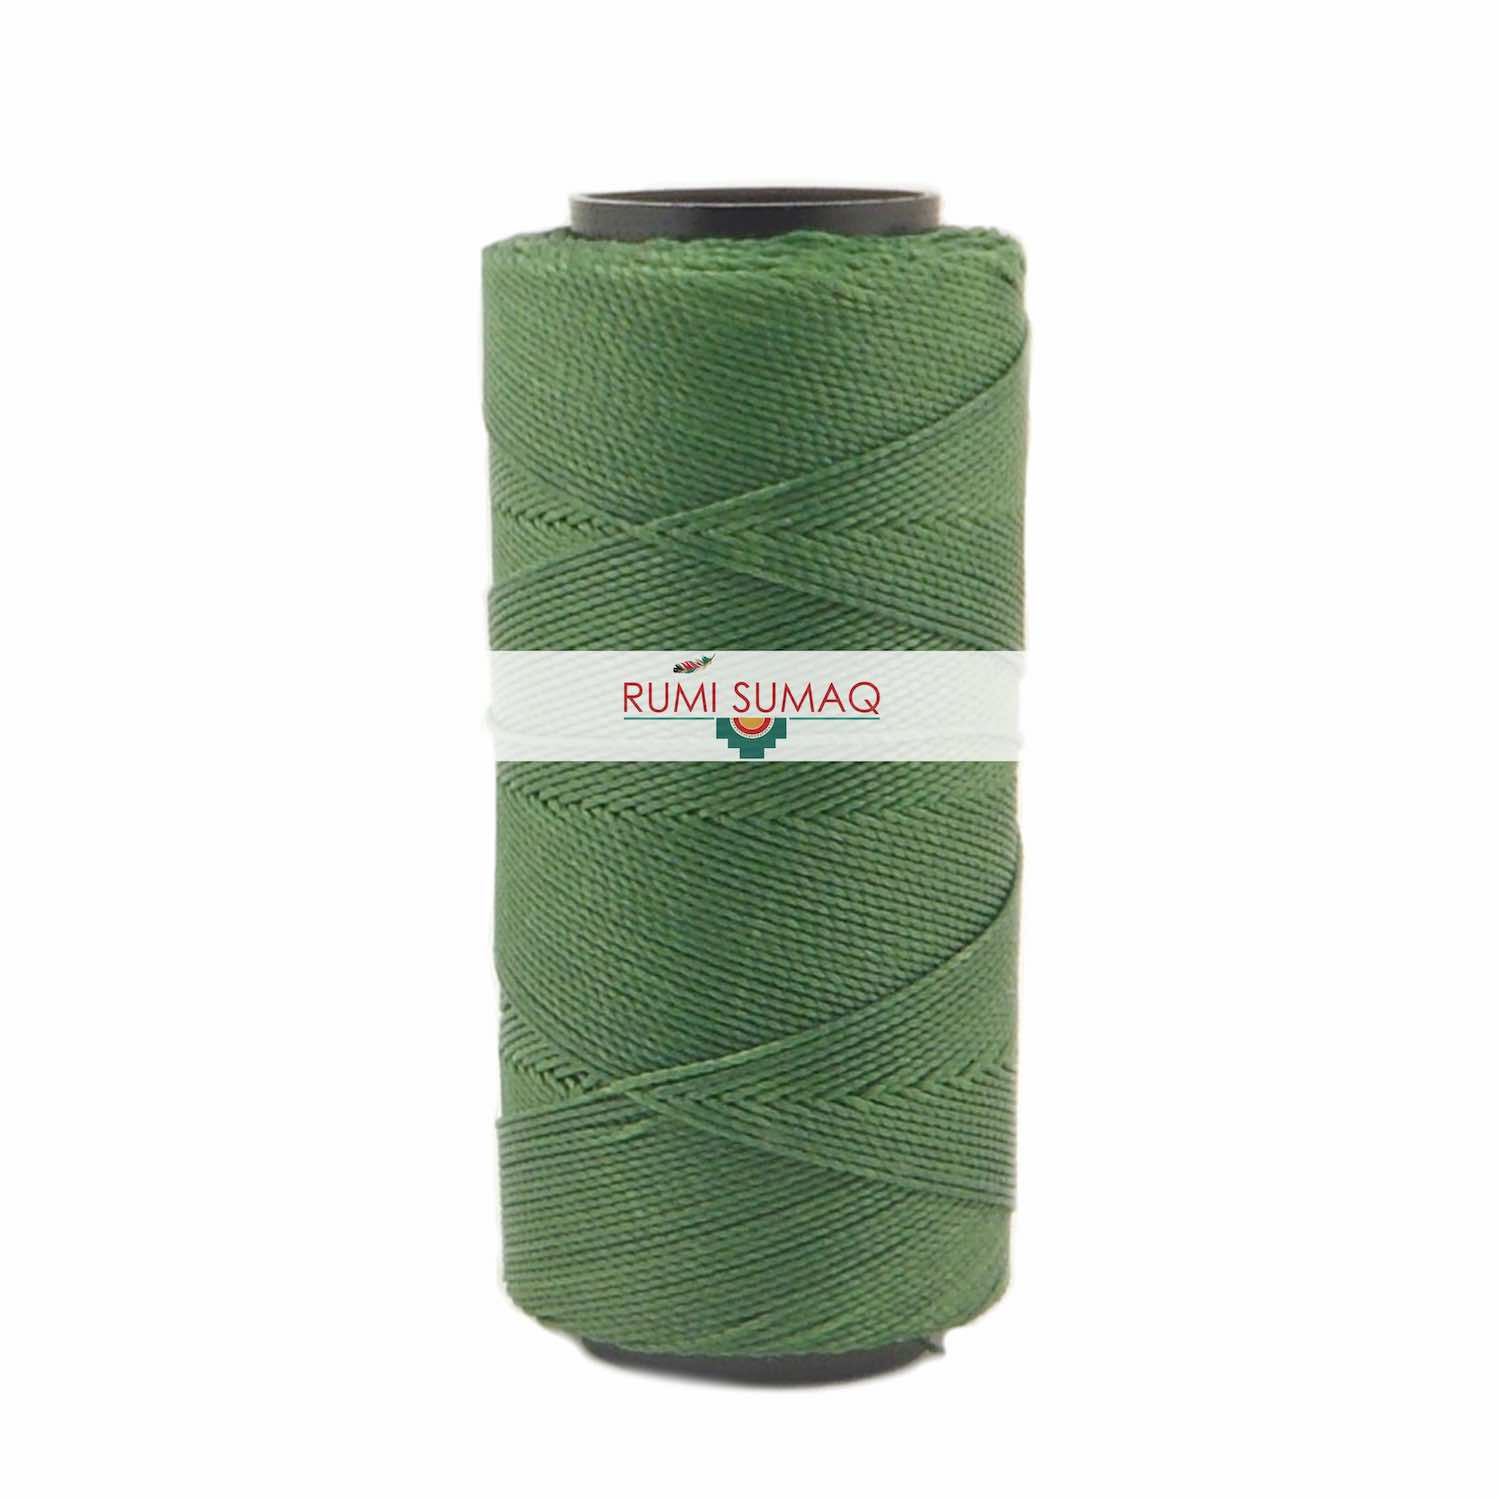 Settanyl Encerado 06-384 Clover Green 1mm Waxed Polyester Cord | Rumi Sumaq Waxed Thread